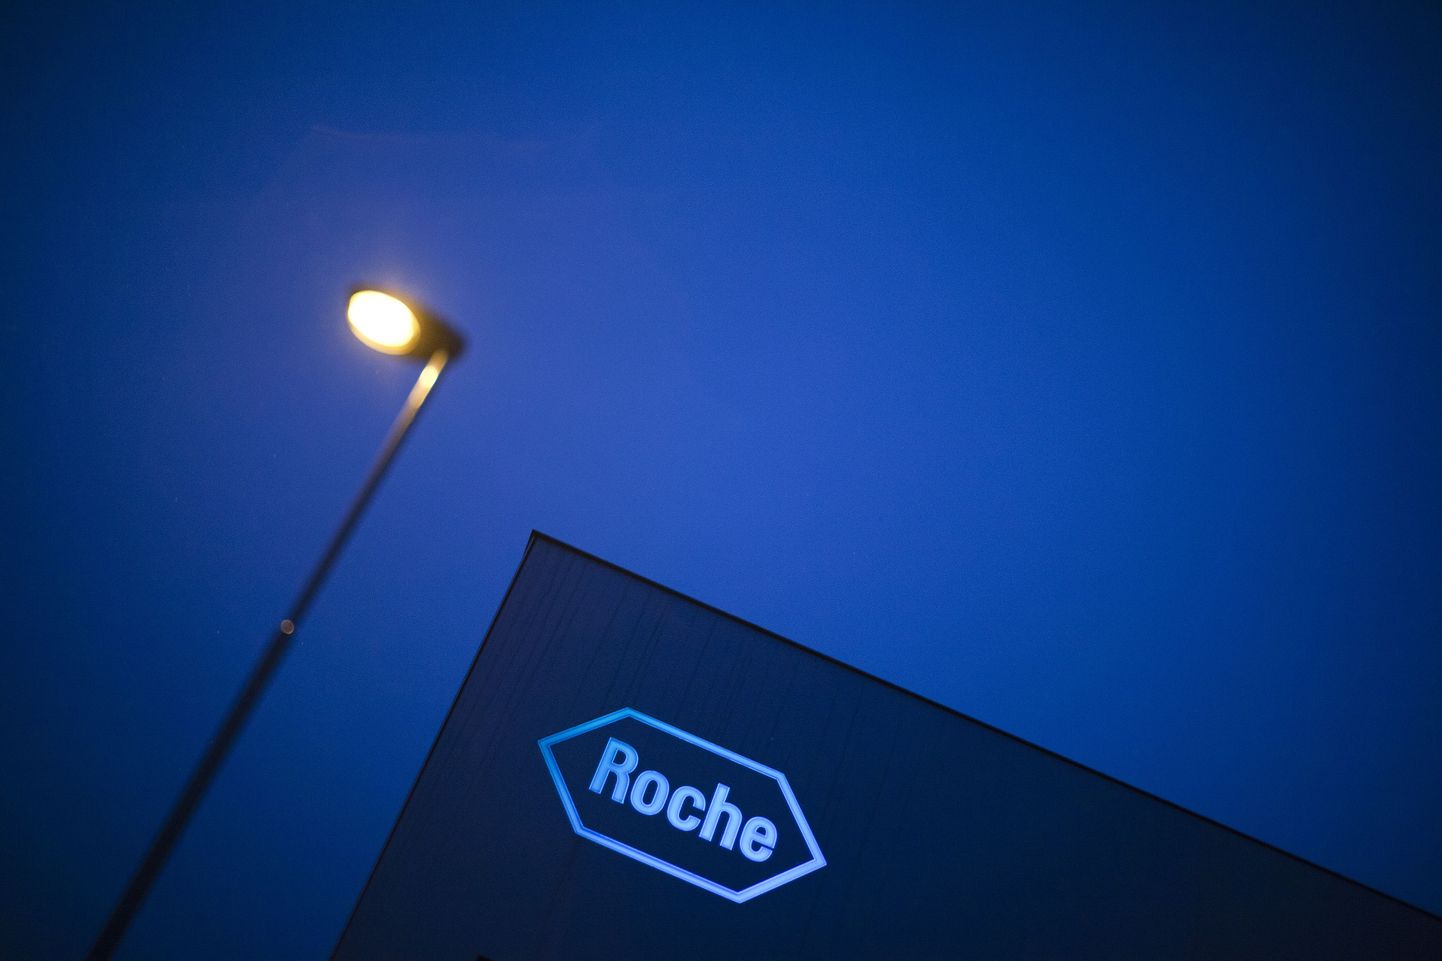 Šveitsi ravimifirma Roche'i logo firma hoone seinal.